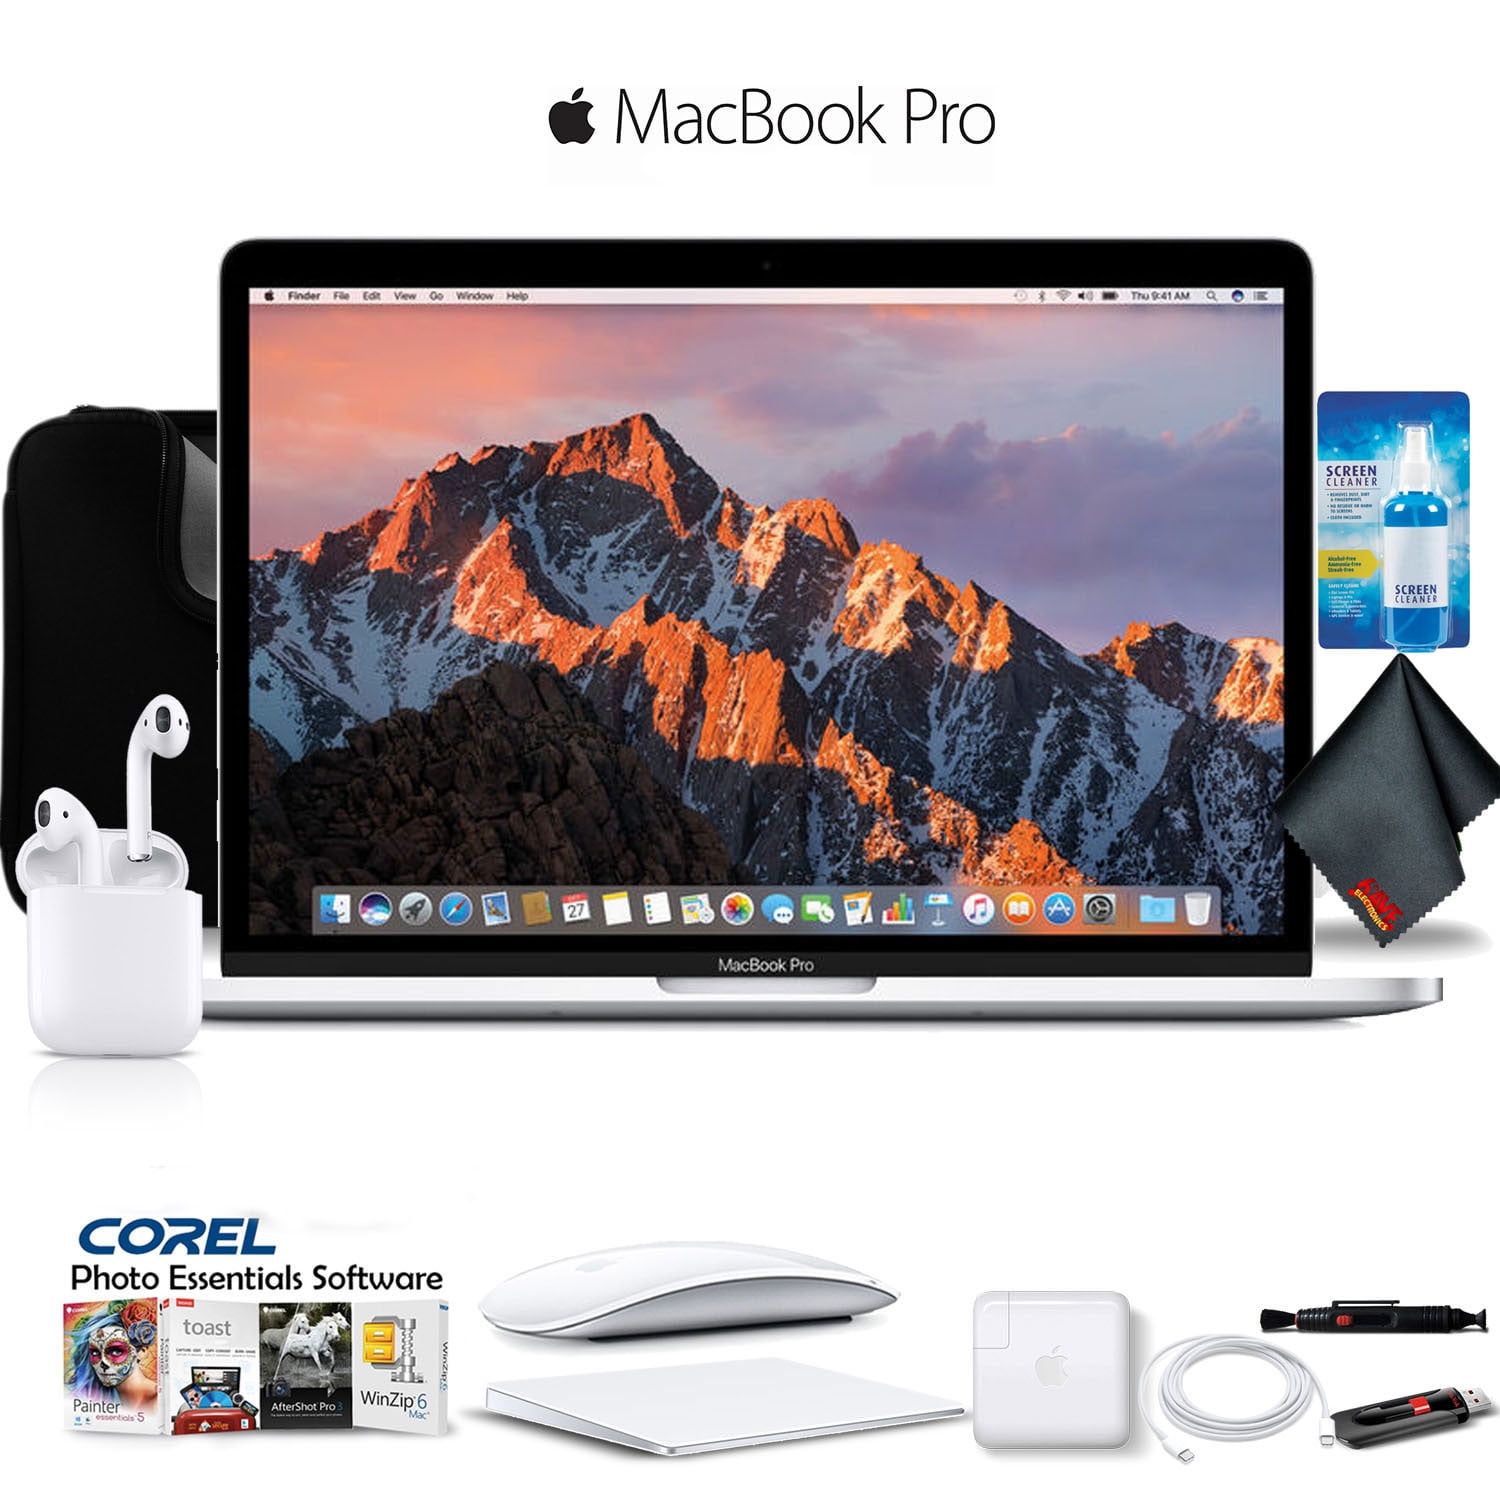 macbook pro multiple monitors mouse skips